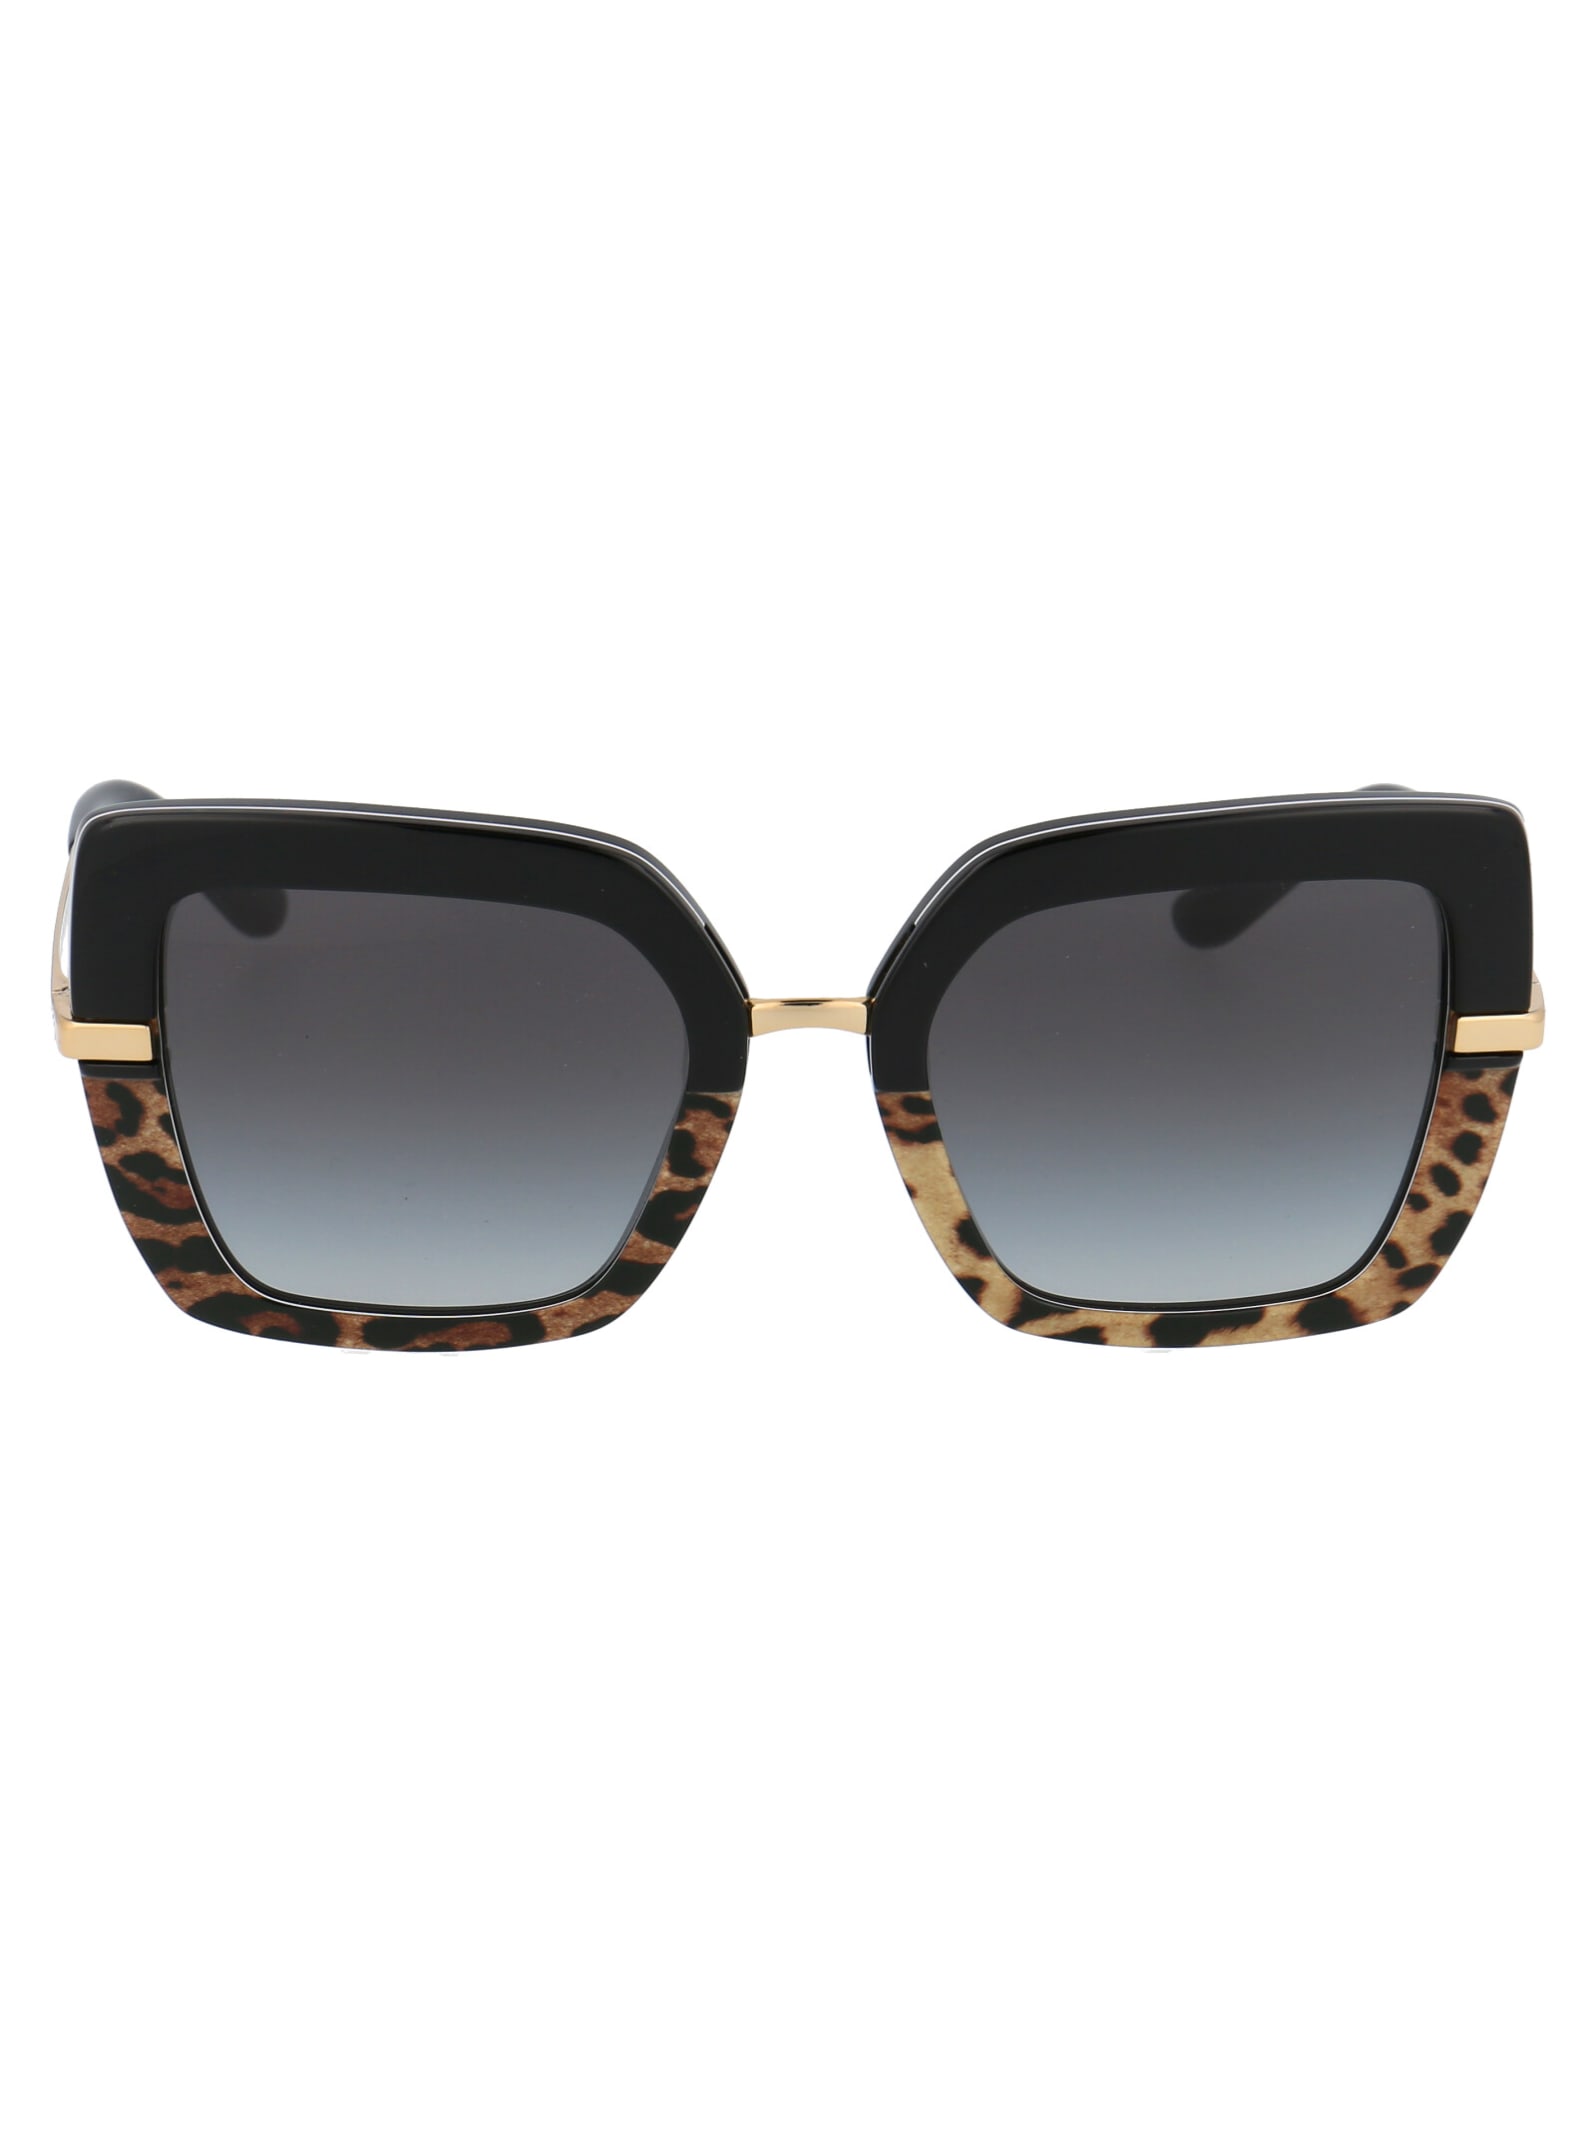 Dolce & Gabbana 0dg4373 Sunglasses